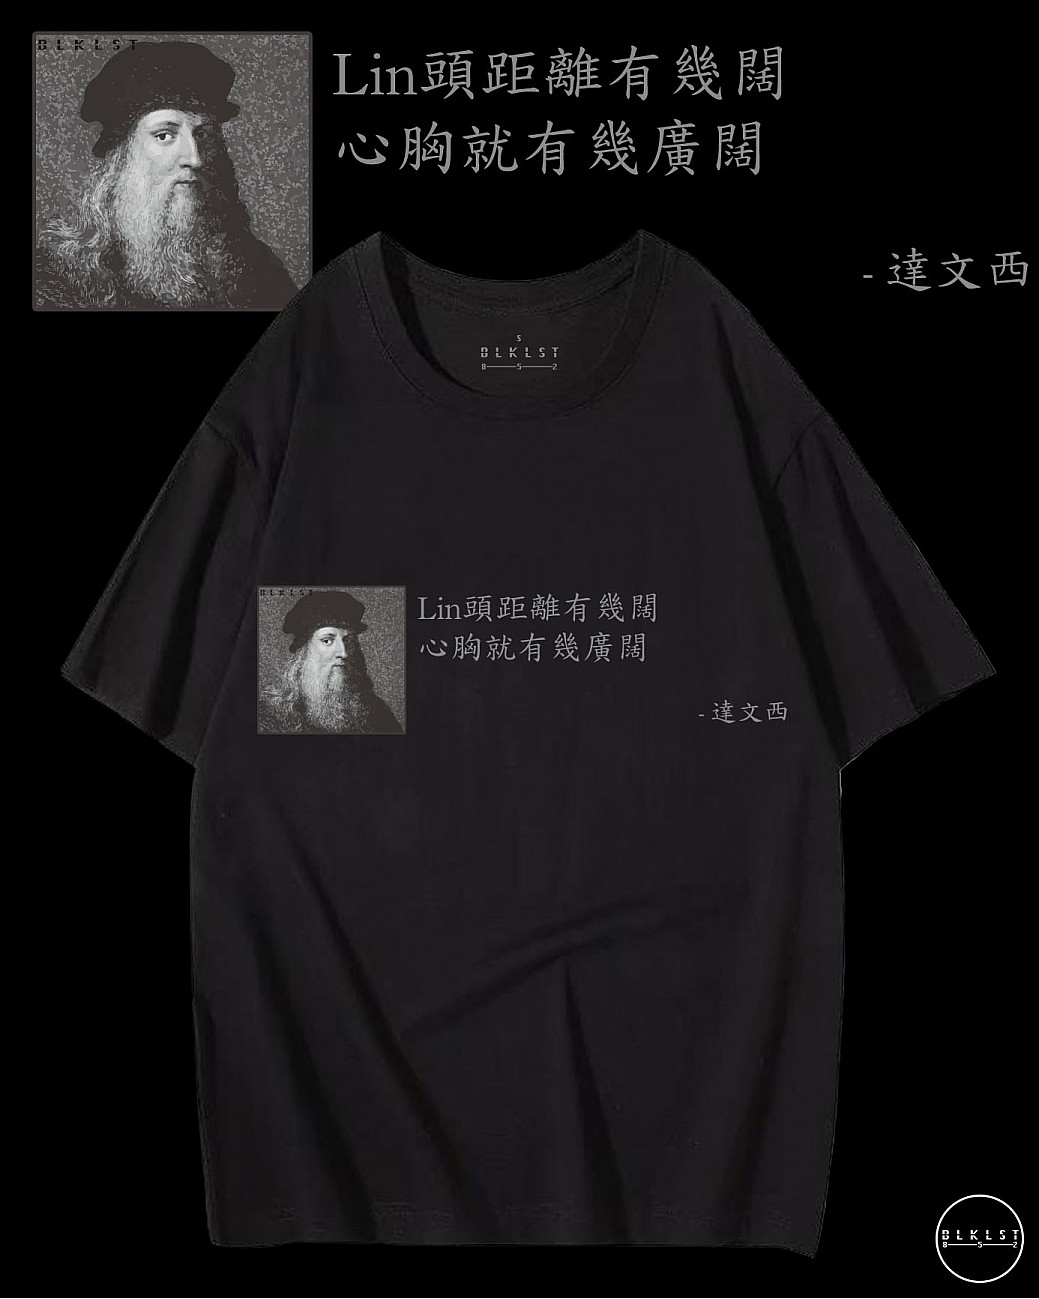 「Lin頭距離有幾闊 心胸就有幾廣闊」T恤